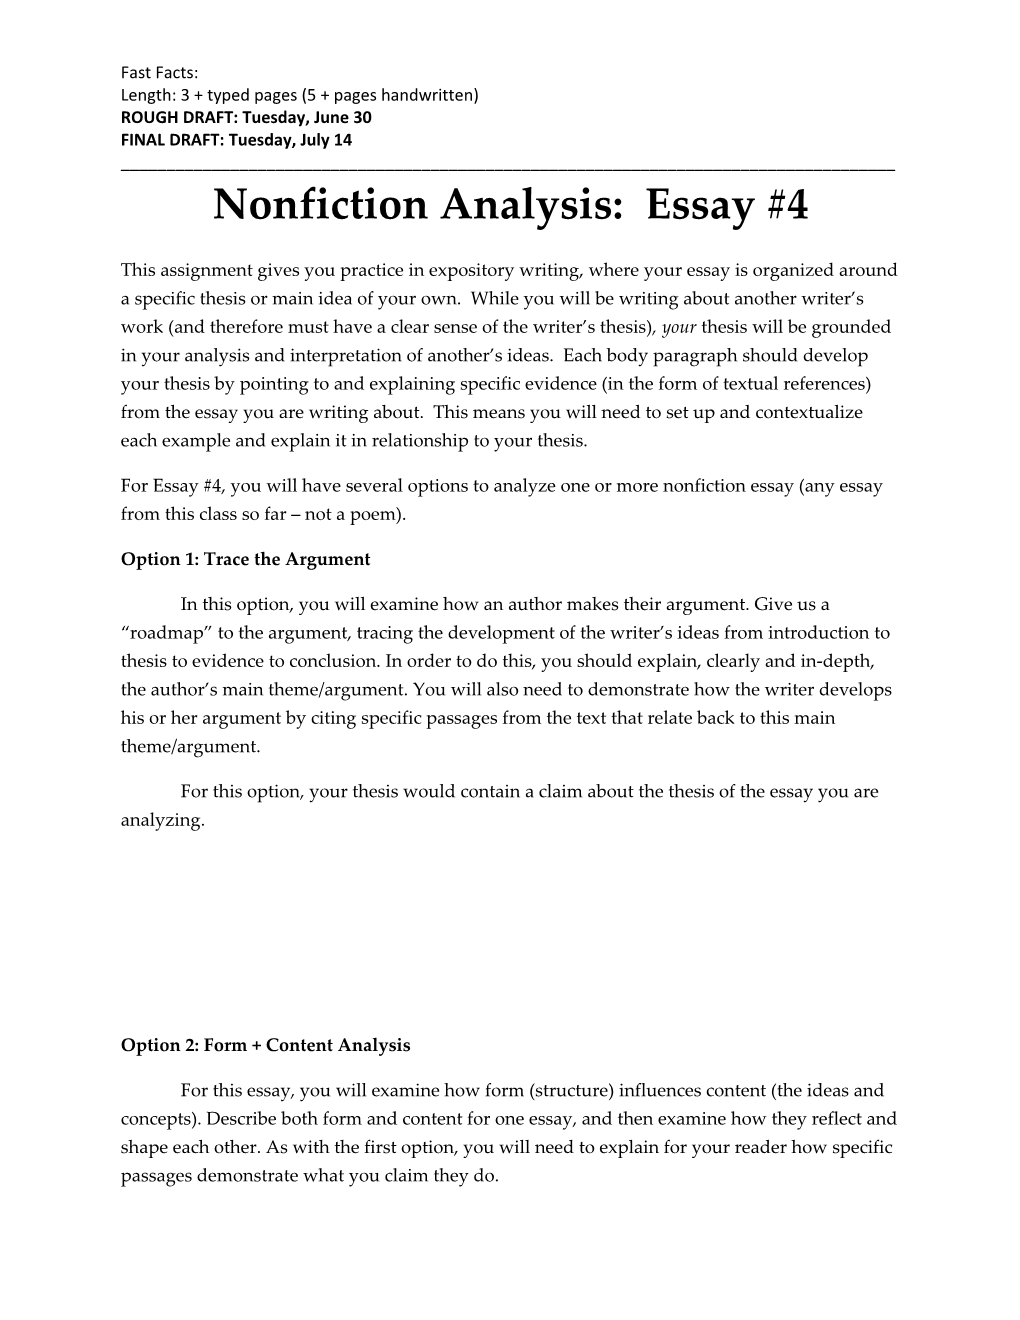 Nonfiction Analysis: Essay #4